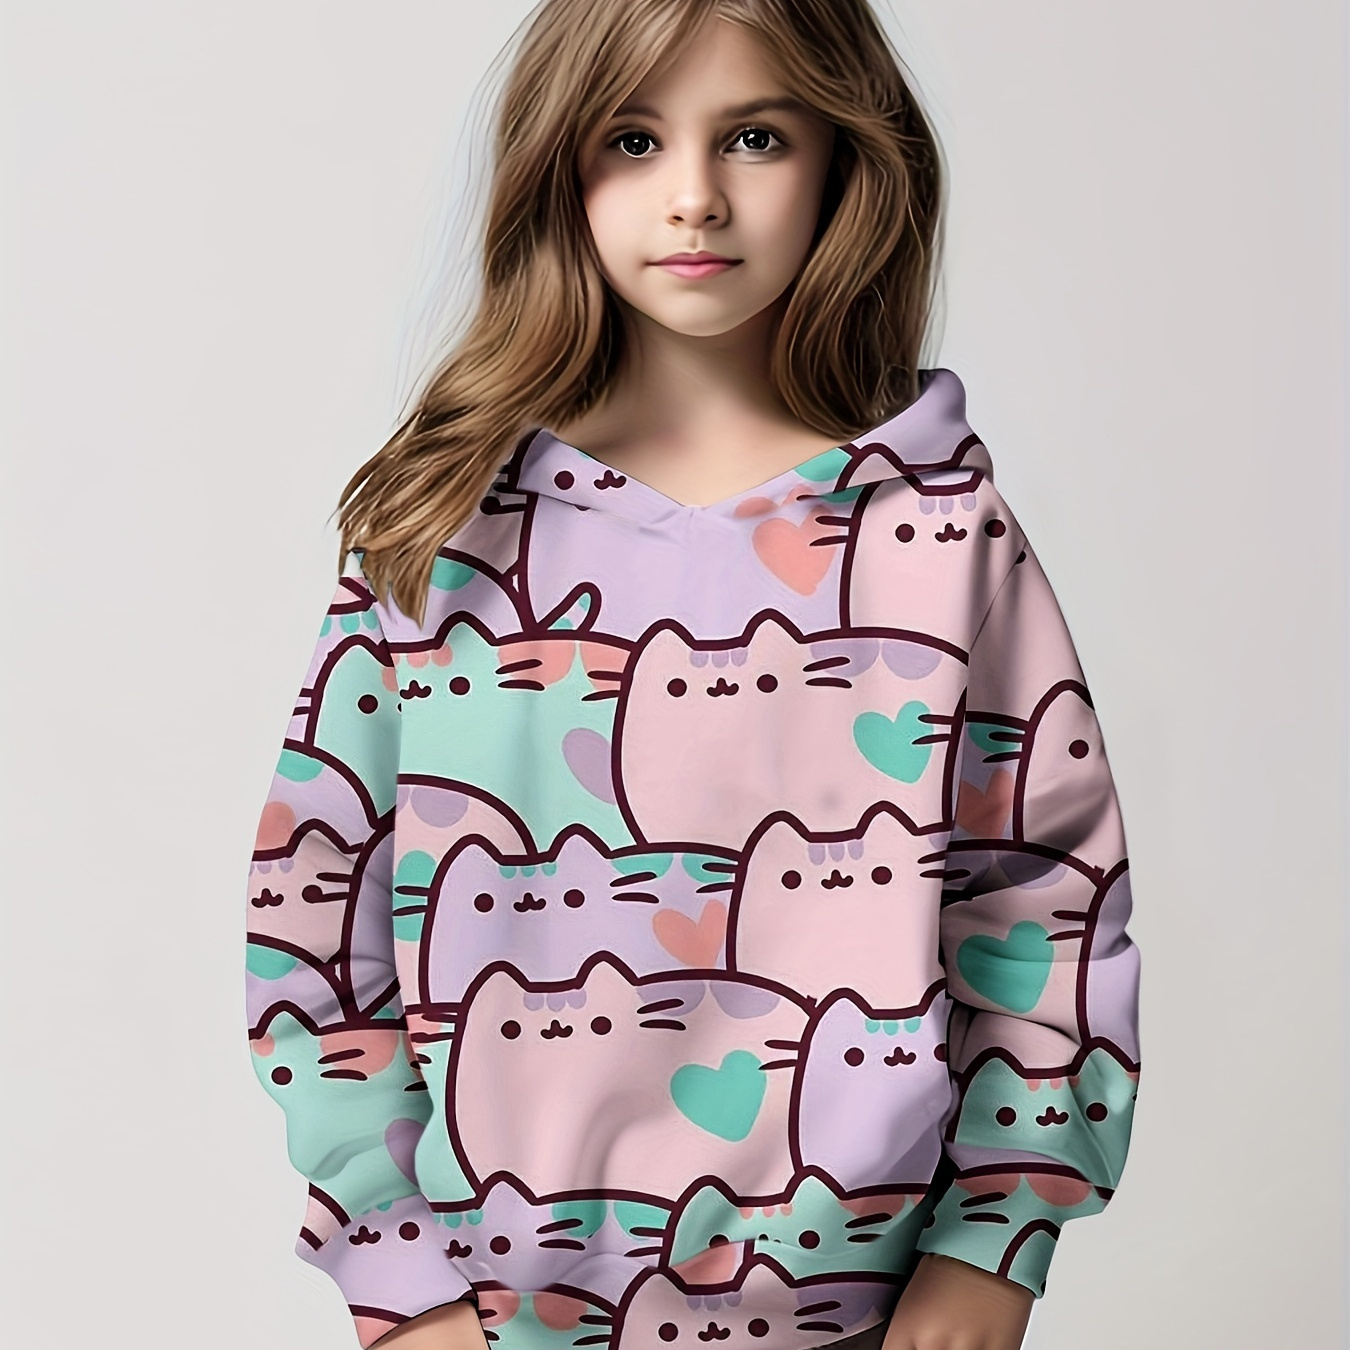 

Kid/ Teen Girls Cartoon Cats Pattern Comfy Versatile Hooded Sweatshirt Top For Street & Fashion Look, Fall/ Winter Outfit